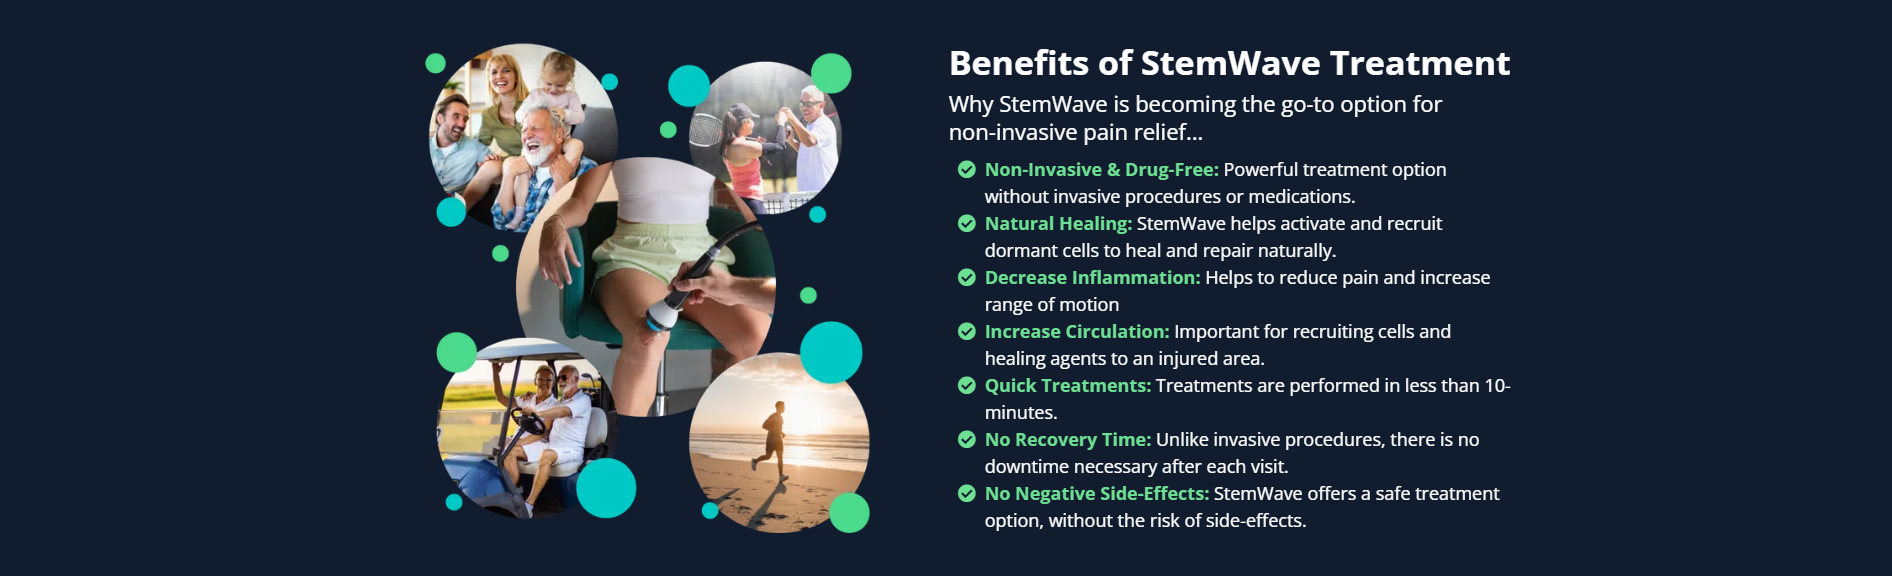 benefits of stemwave